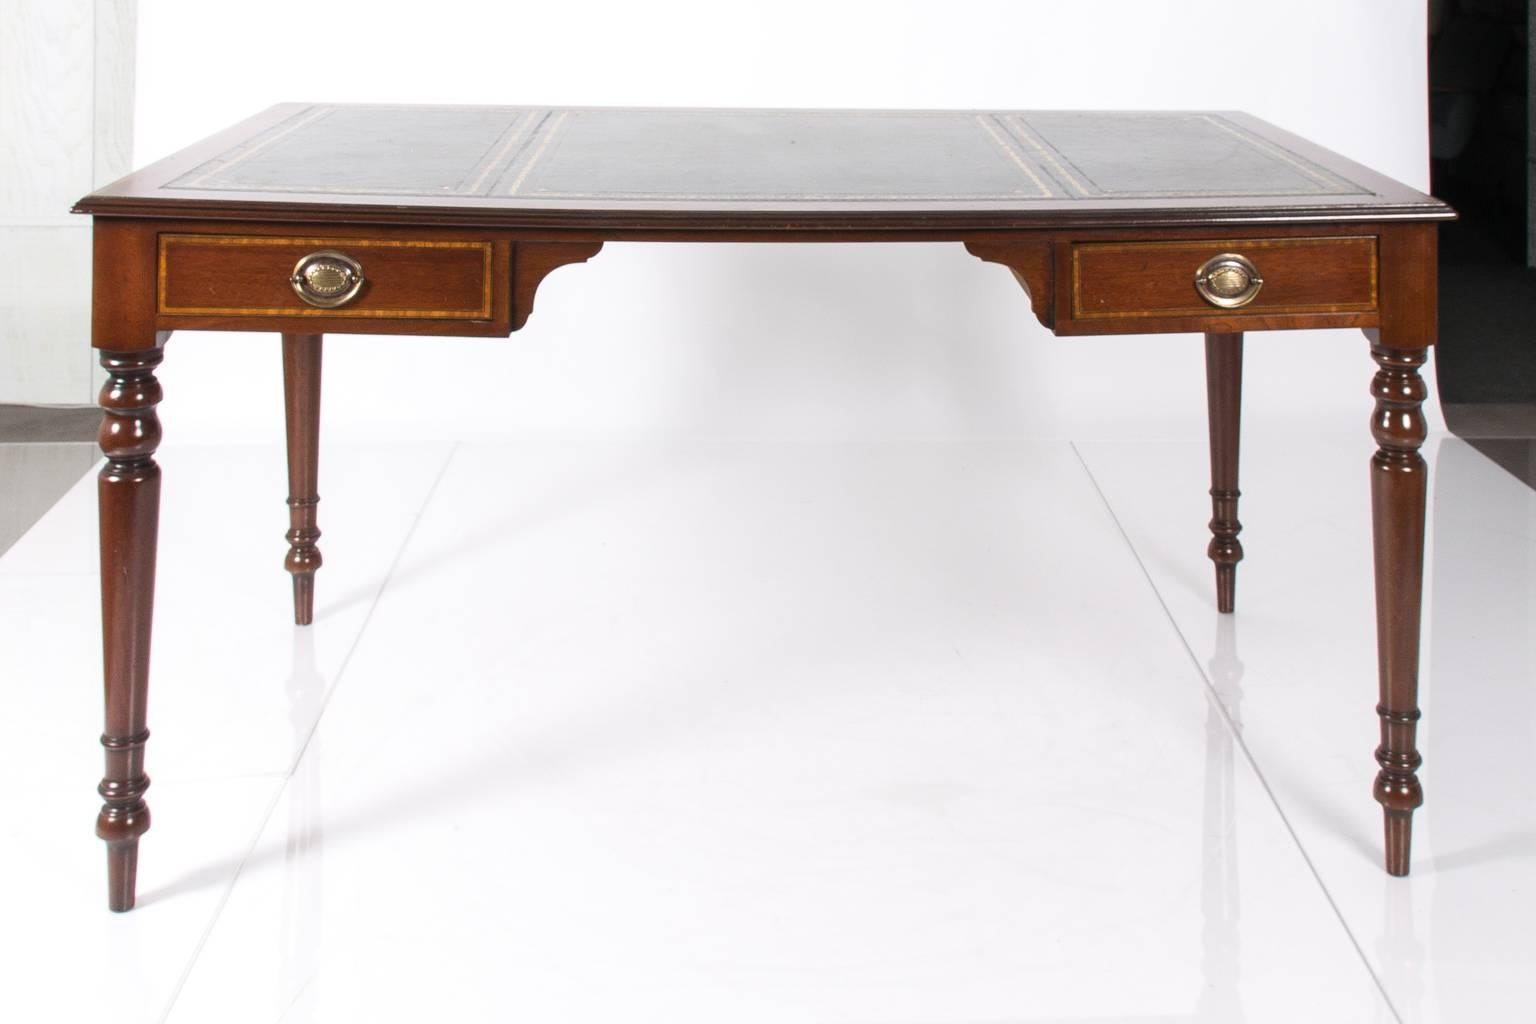 19th century English mahogany leather top writing desk.
 